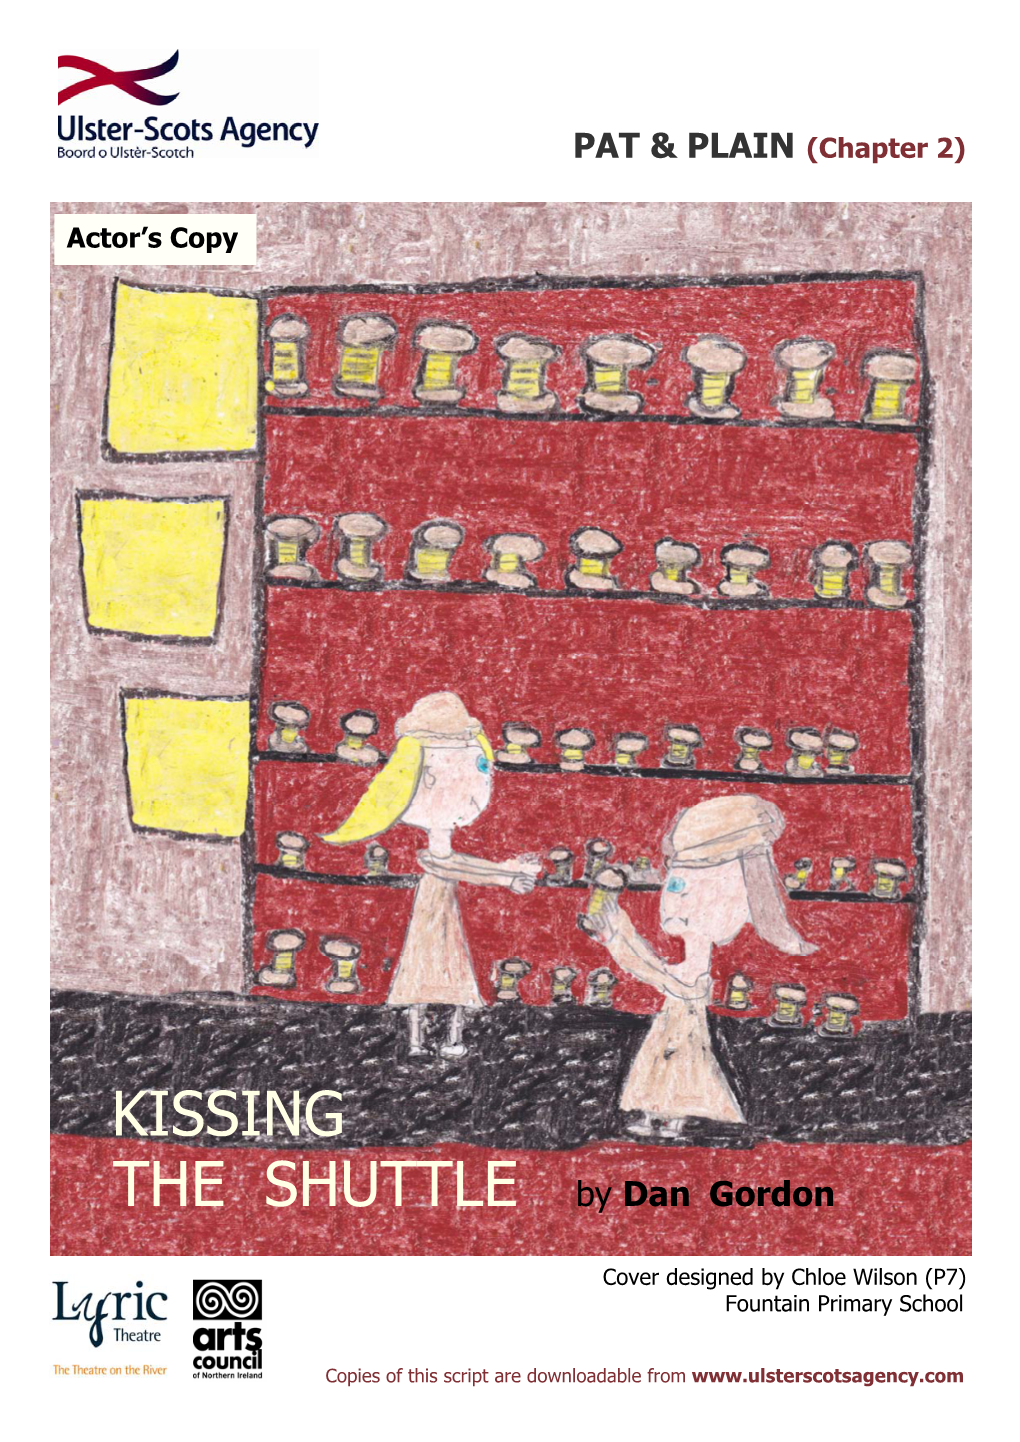 KISSING the SHUTTLE by Dan Gordon